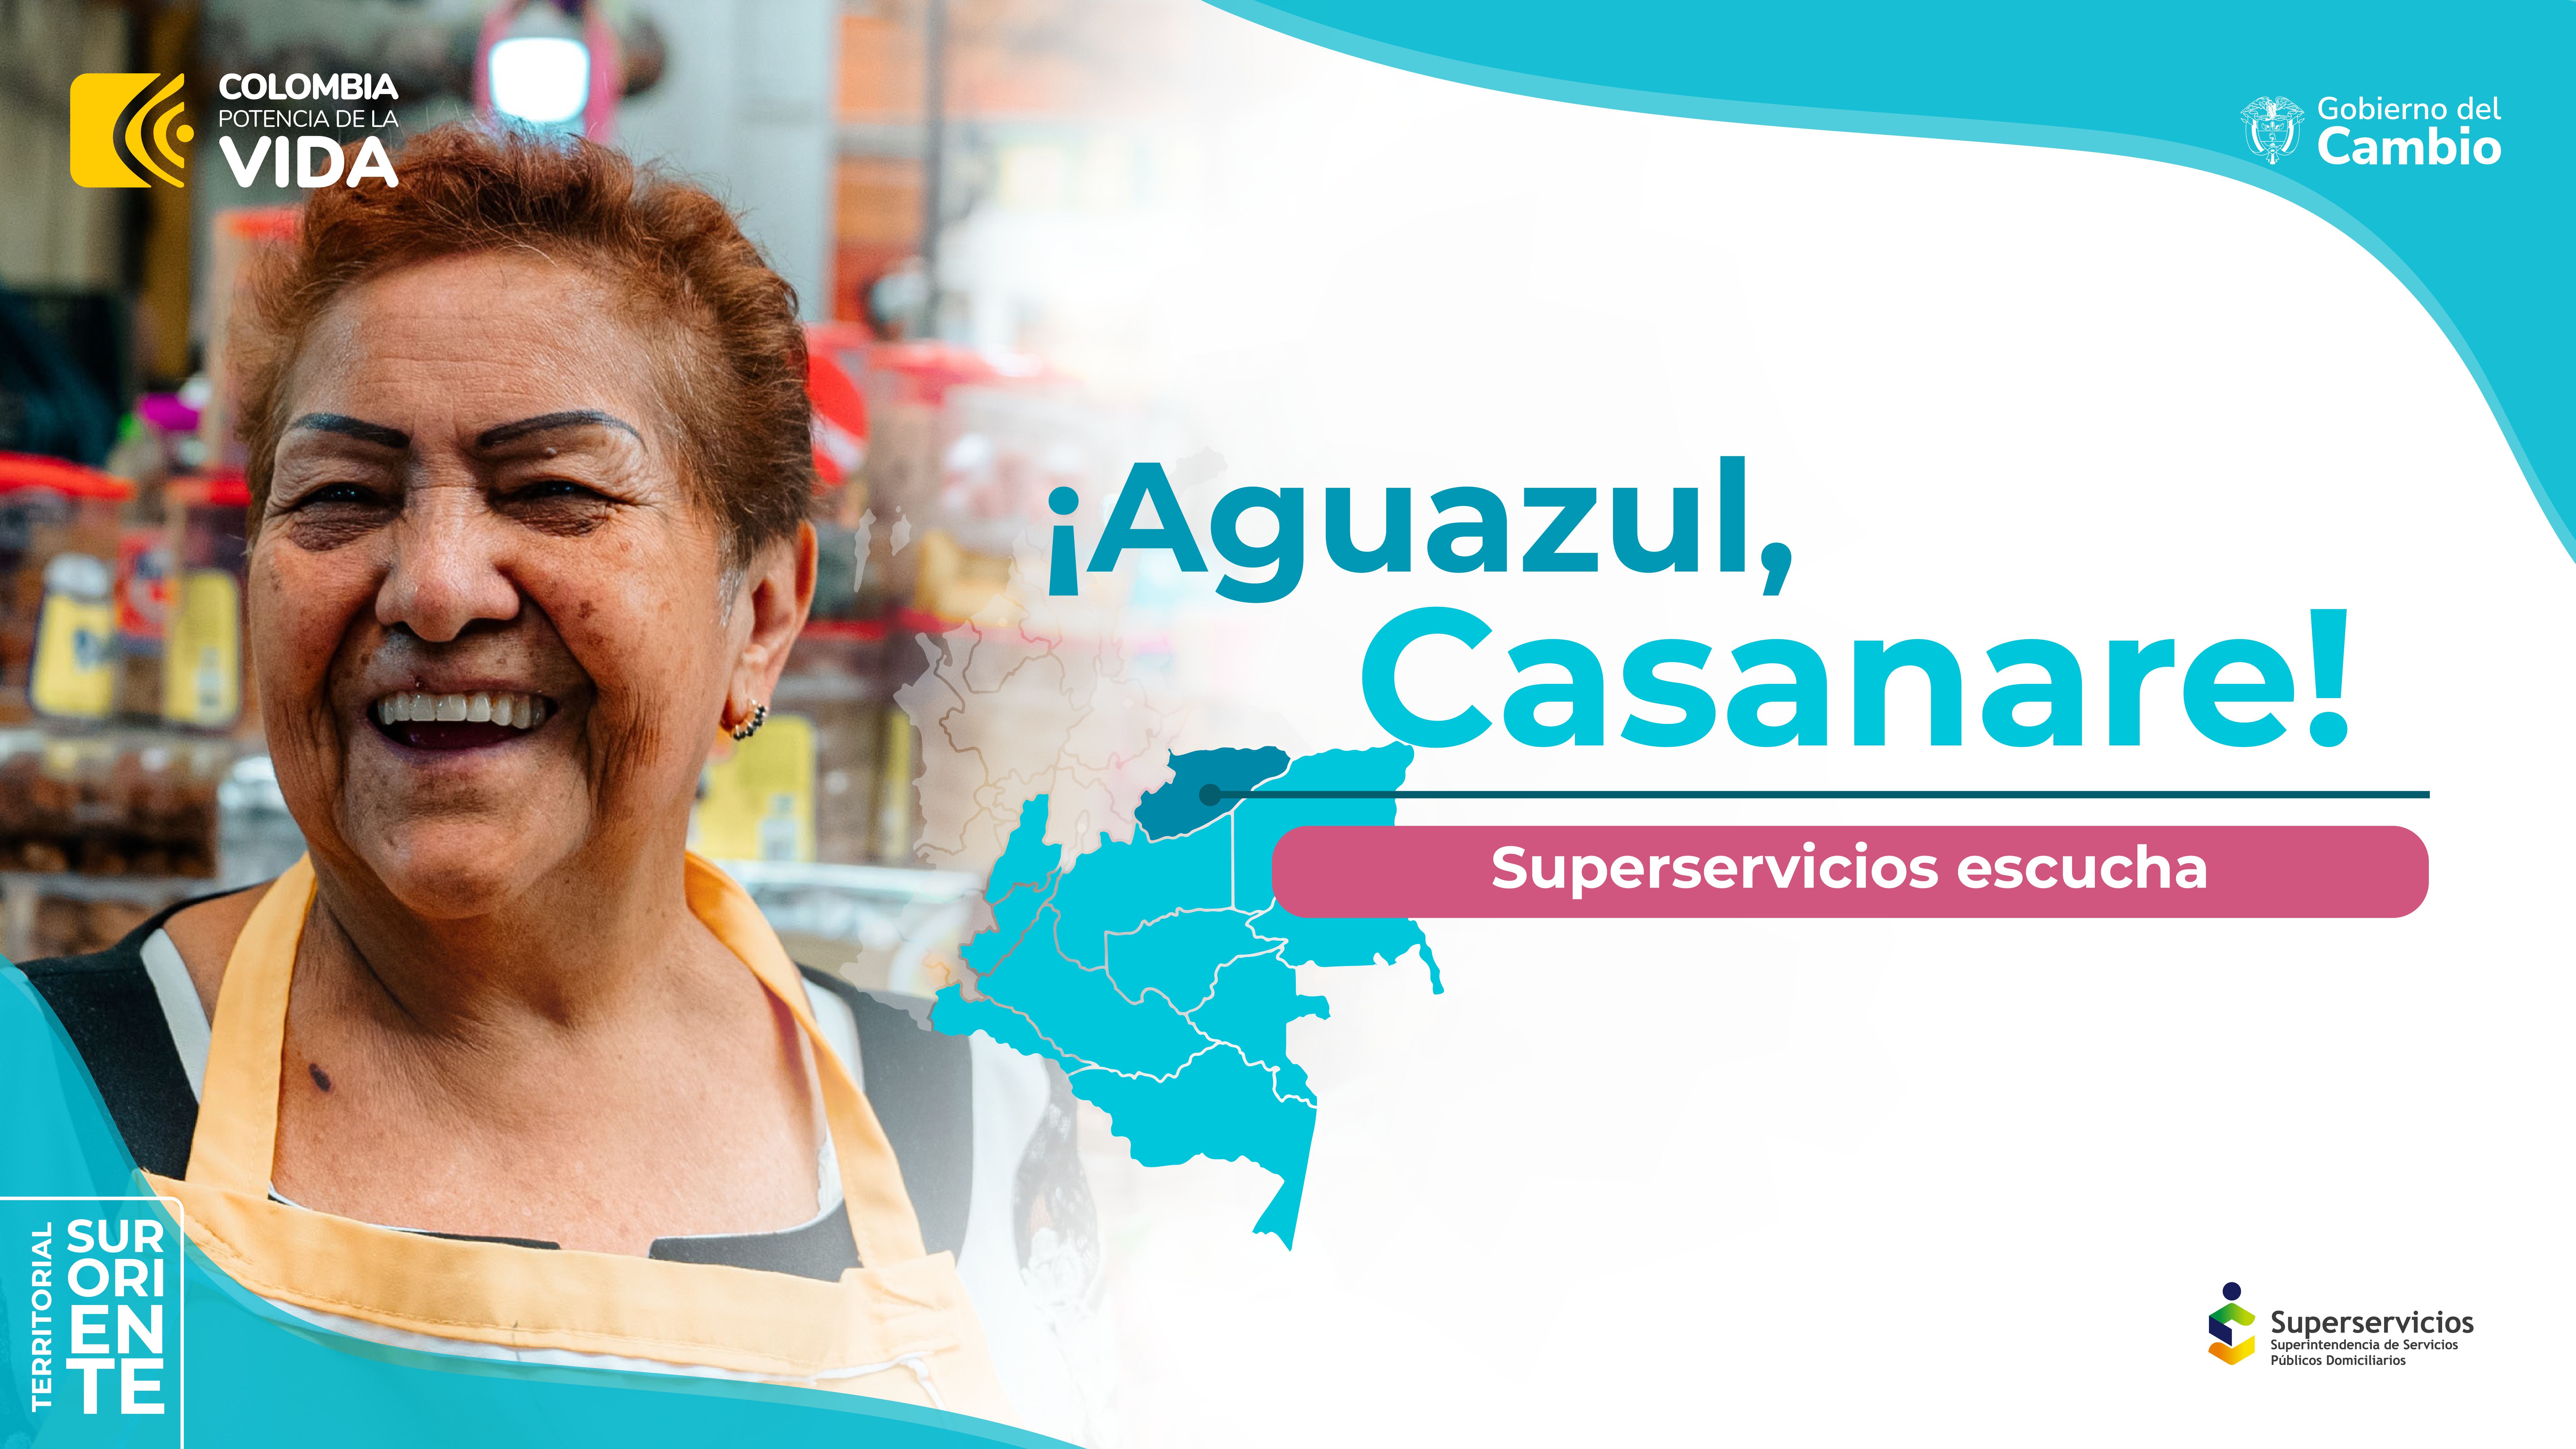 Superservicios escucha en Aguazul, Casanare 
